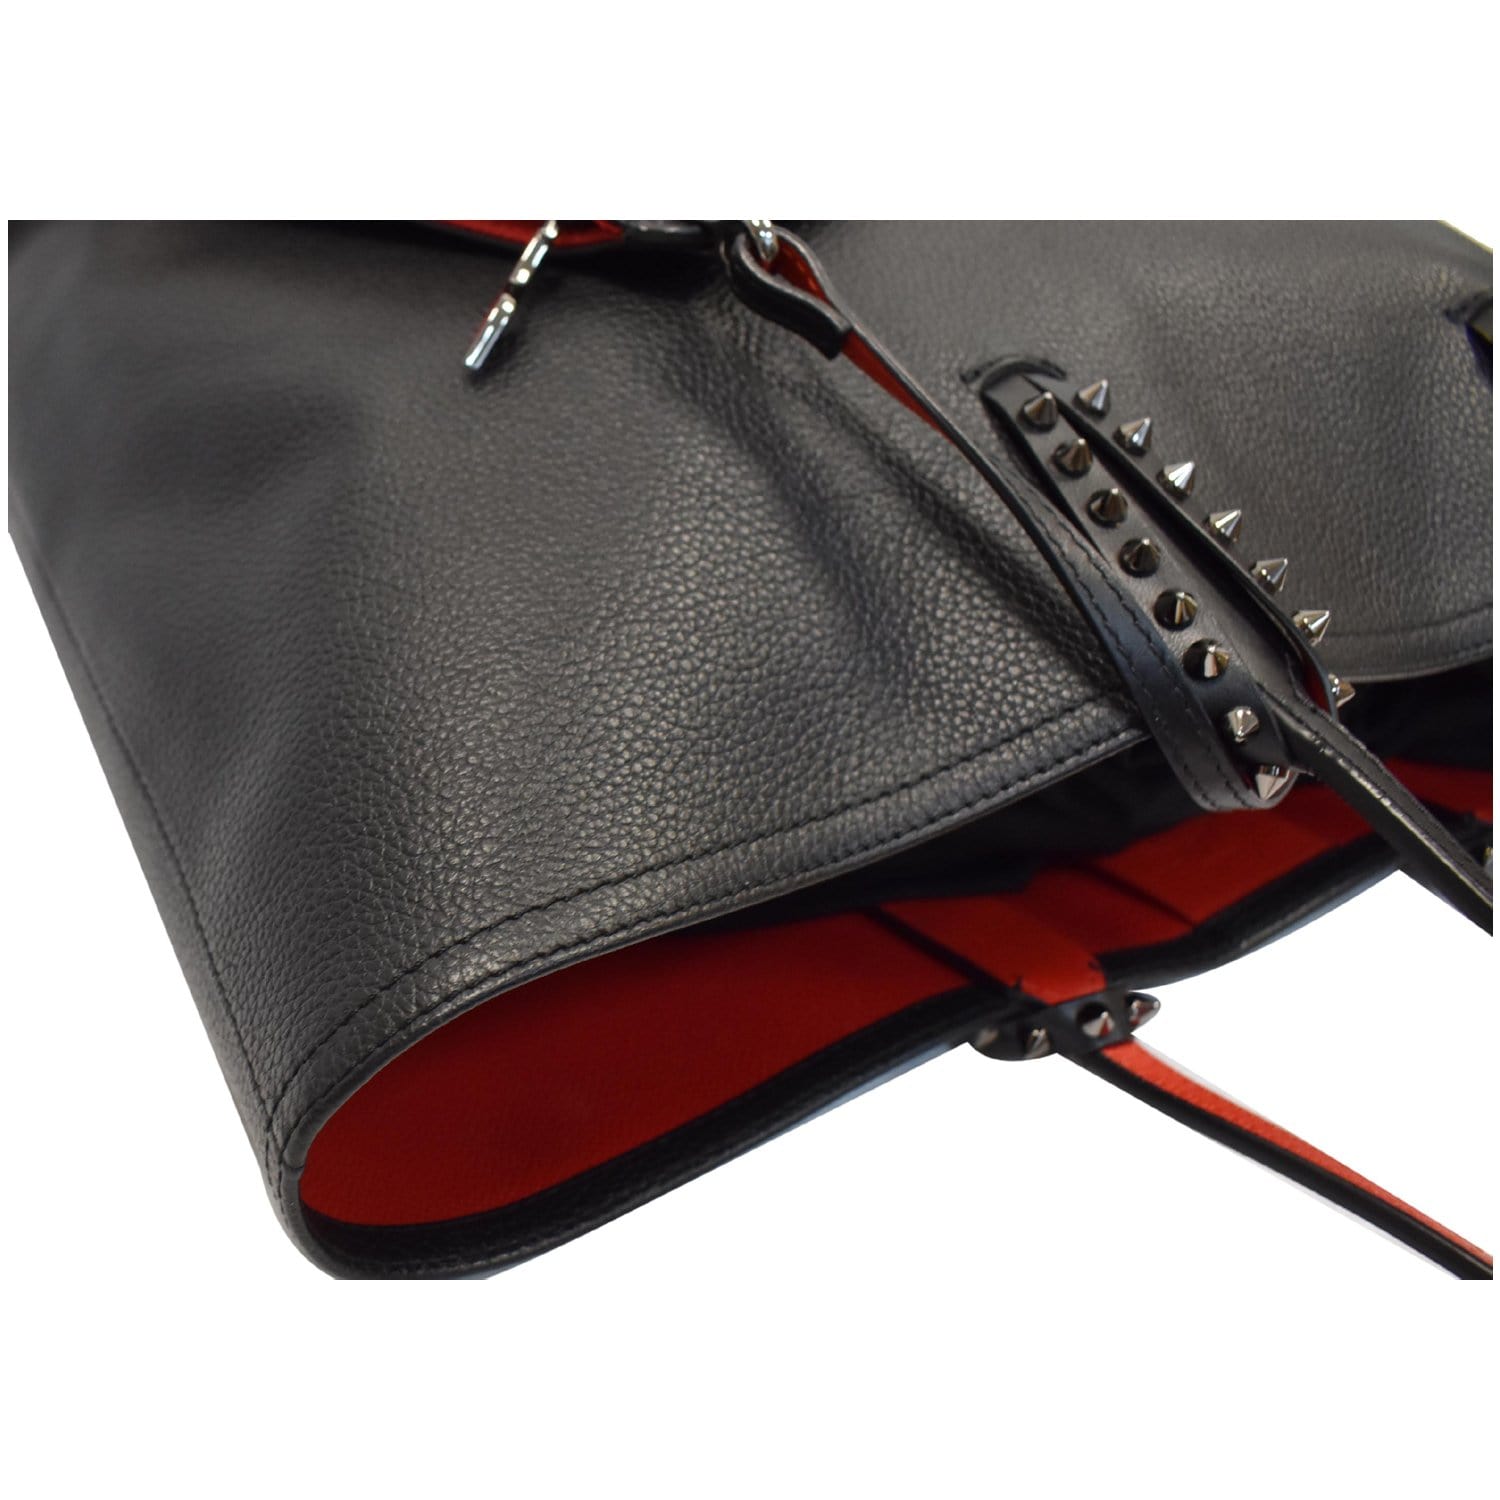 CHRISTIAN LOUBOUTIN Loubiblues Studded Leather Tote Shoulder Bag Black